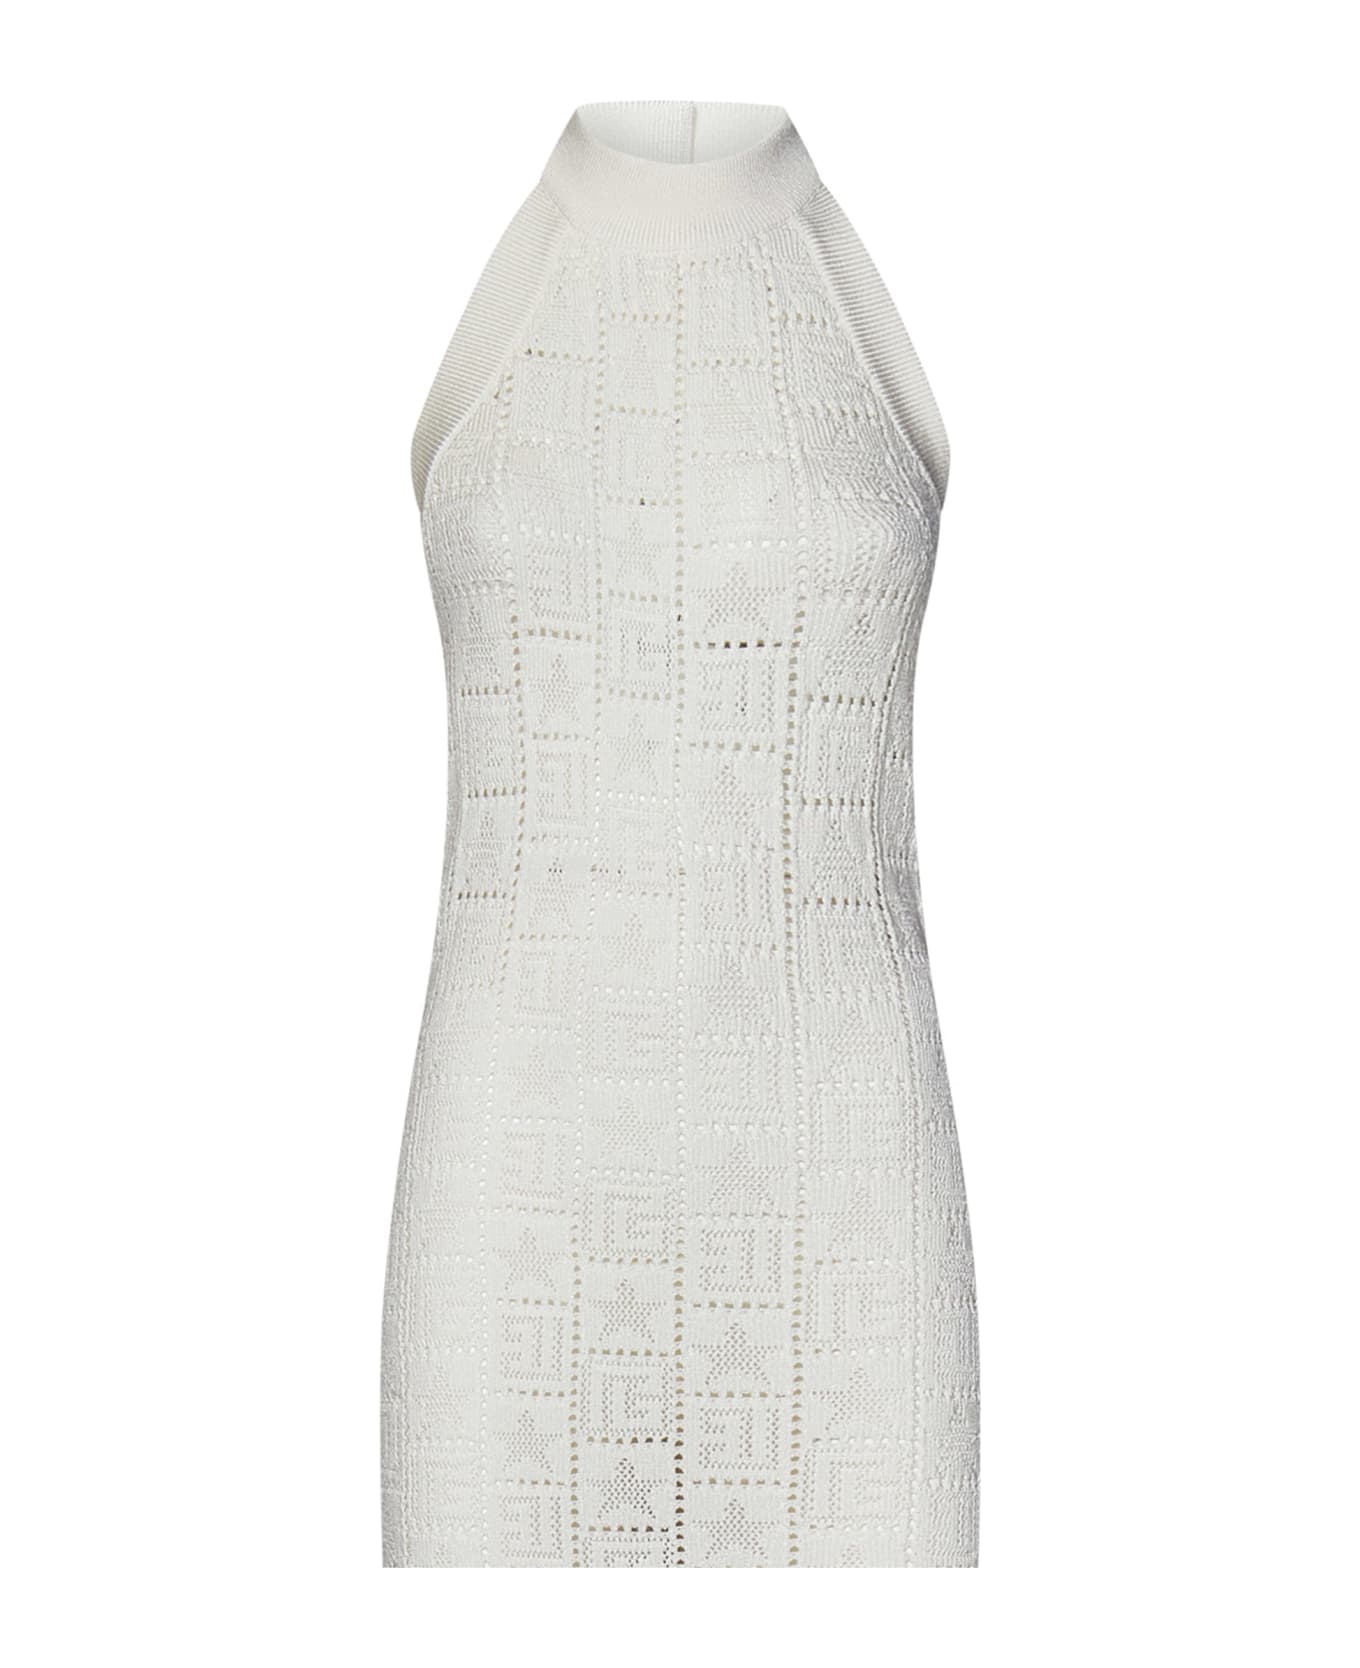 Balmain Paris Dress - White